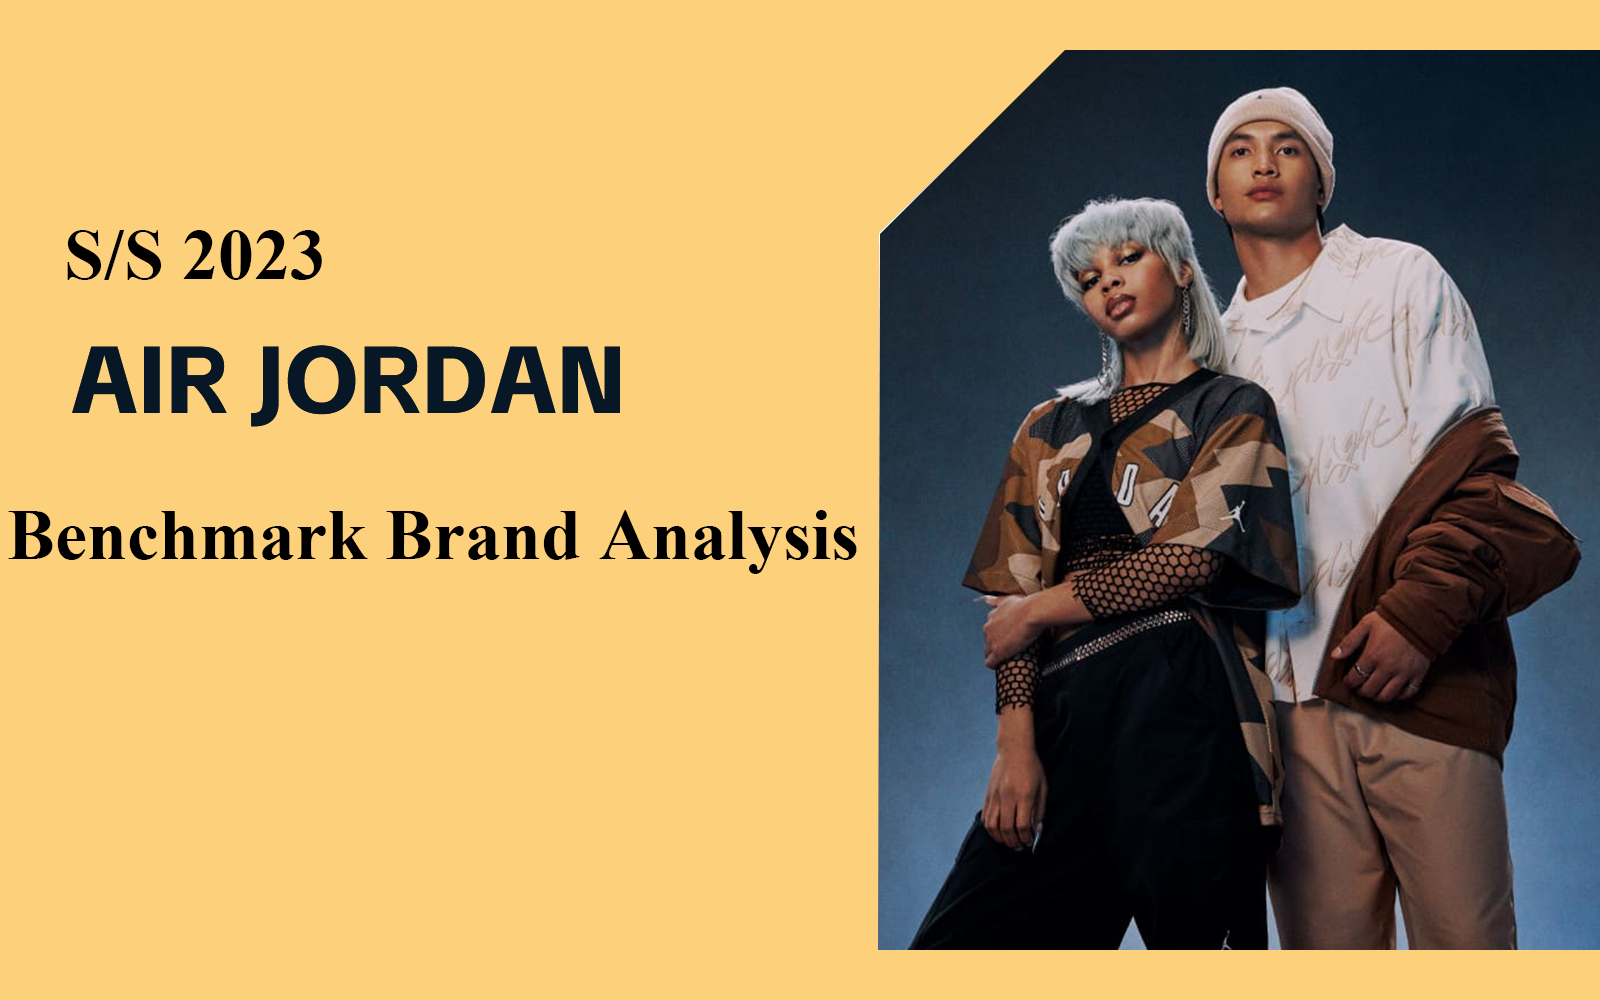 The Analysis of AIR JORDON The Benchmark Sportswear Brand